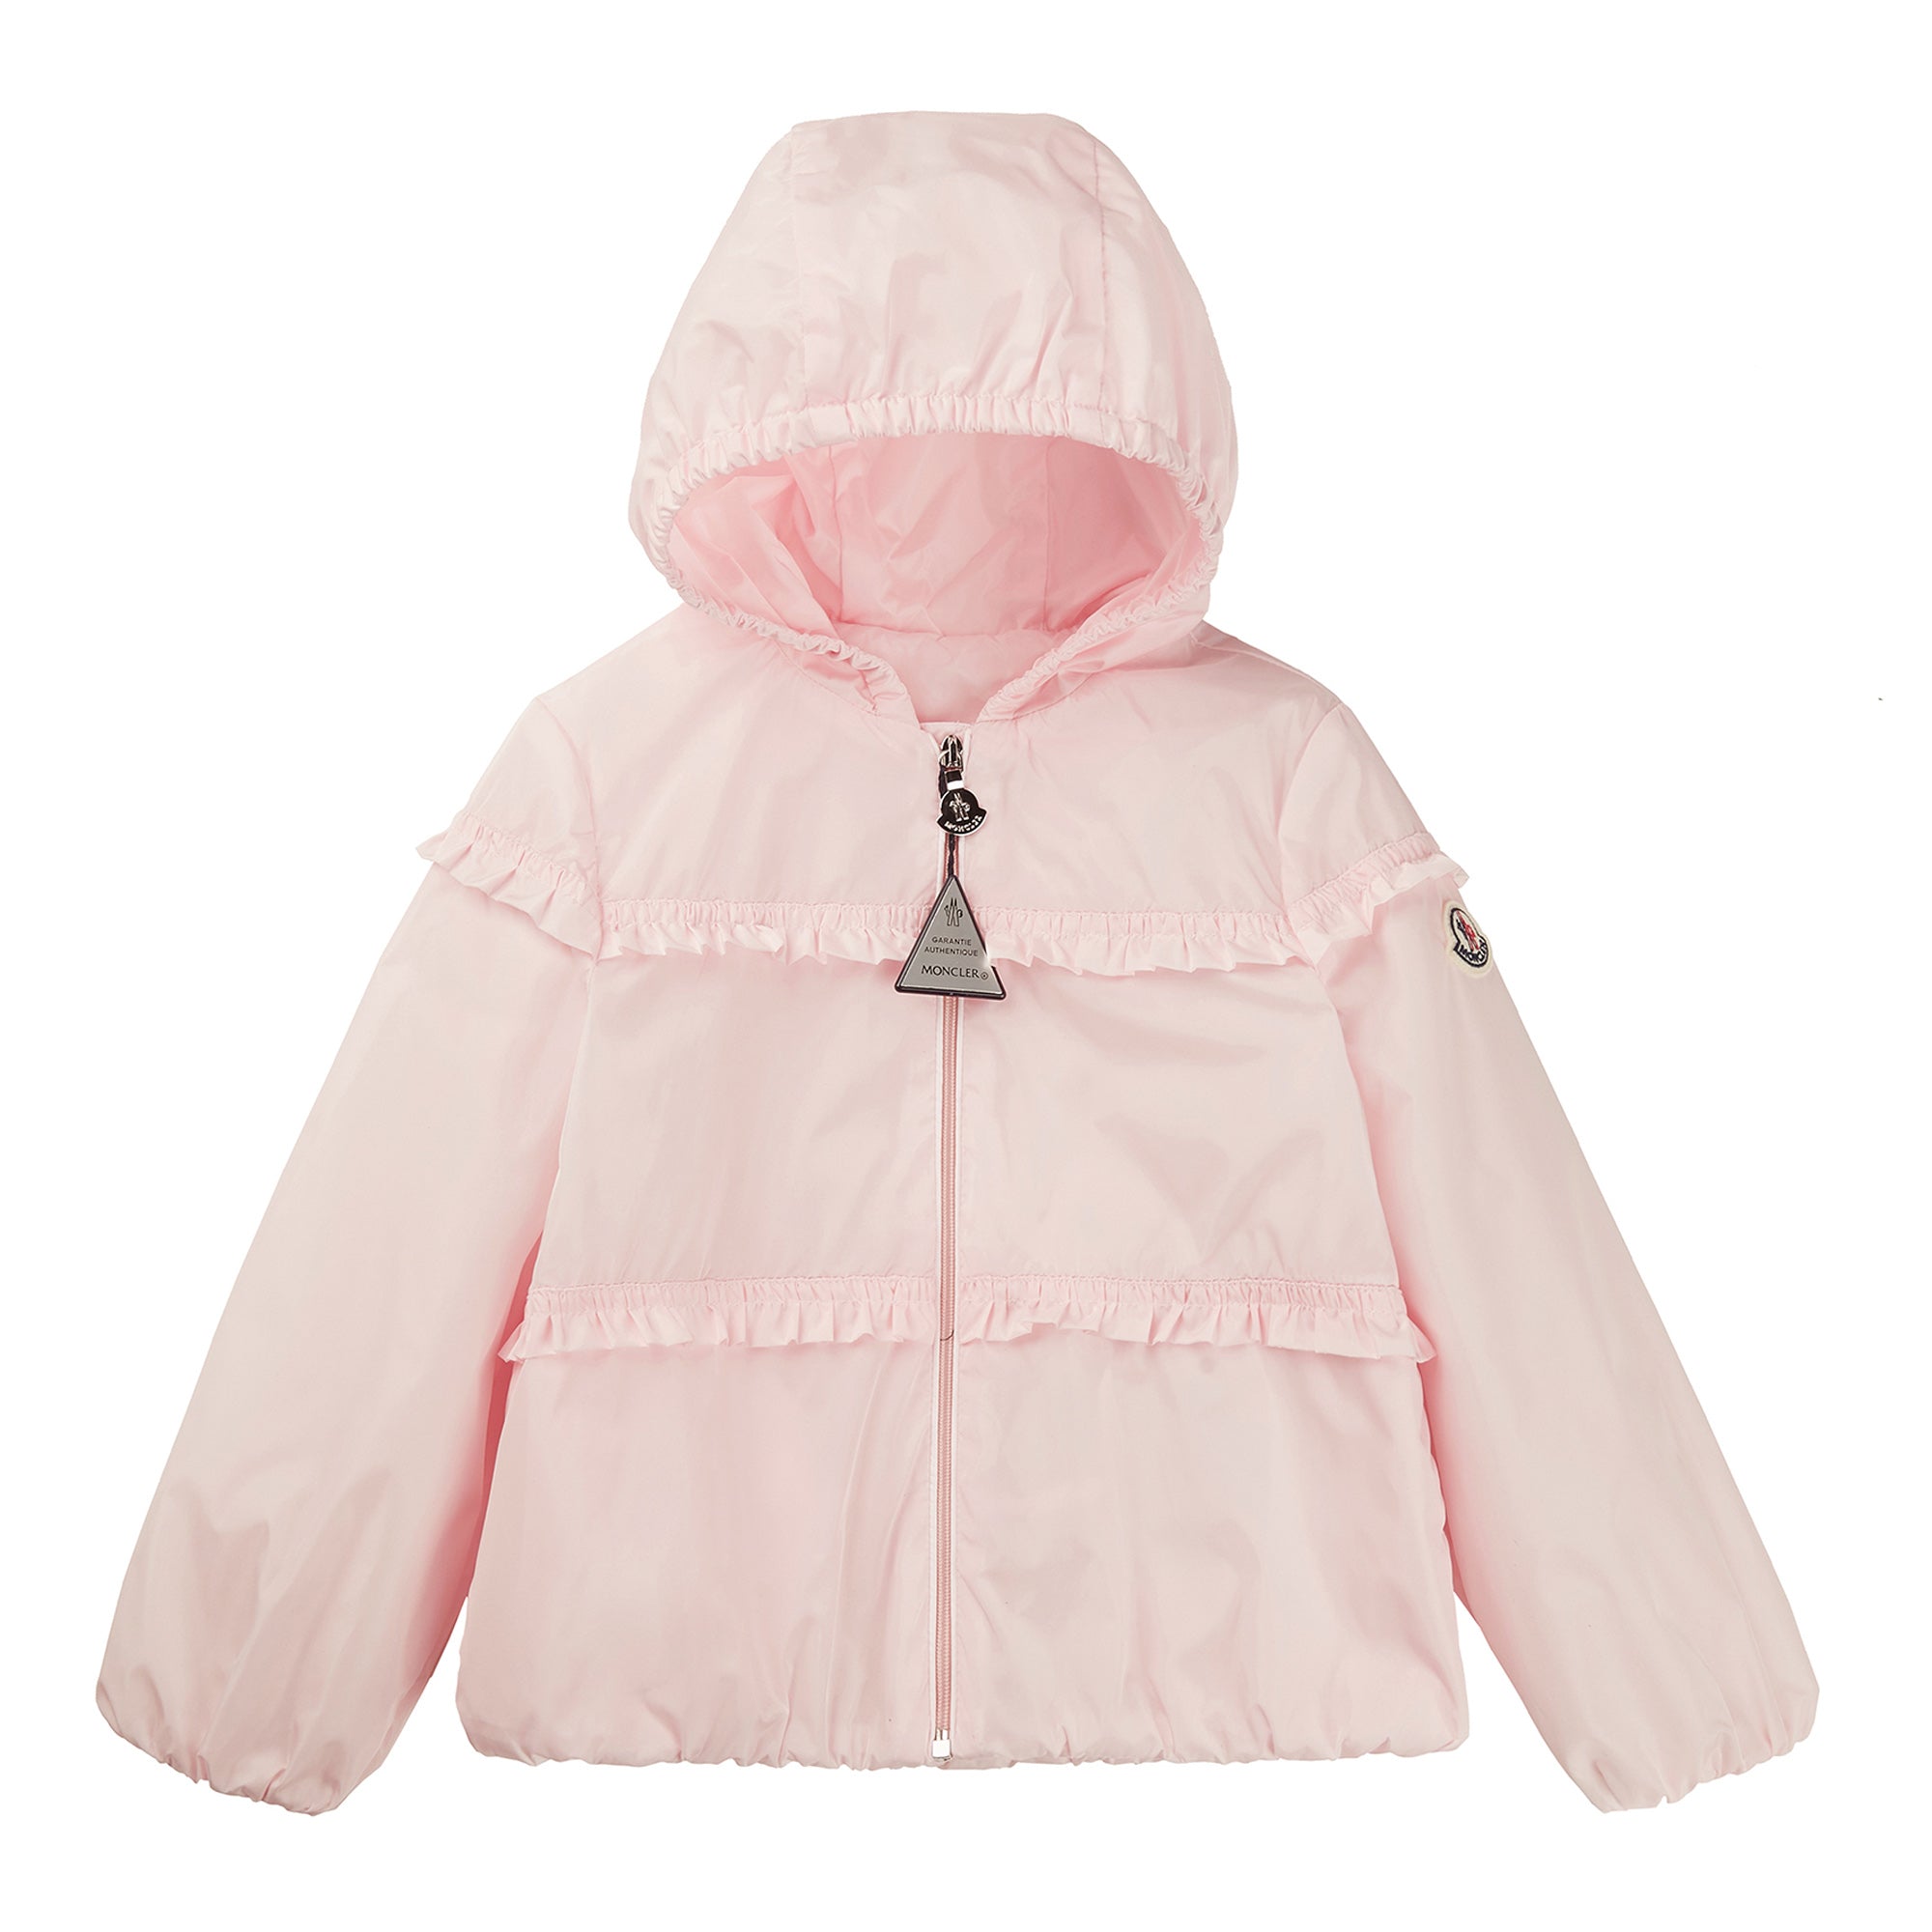 Baby Girls Light Pink Jacket